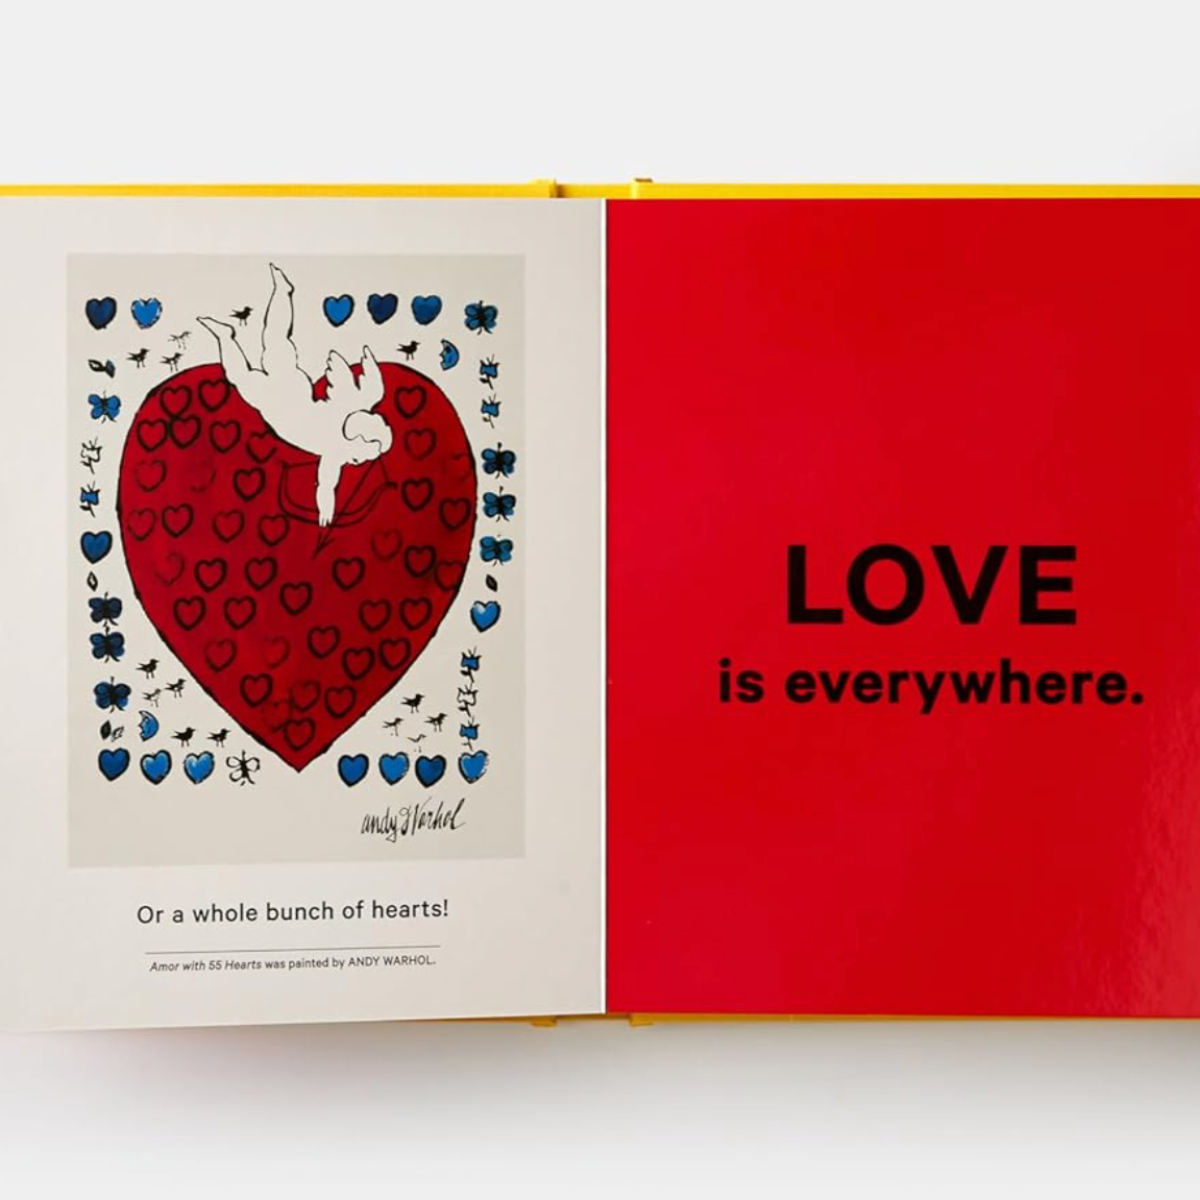 My Art Book of Love board book